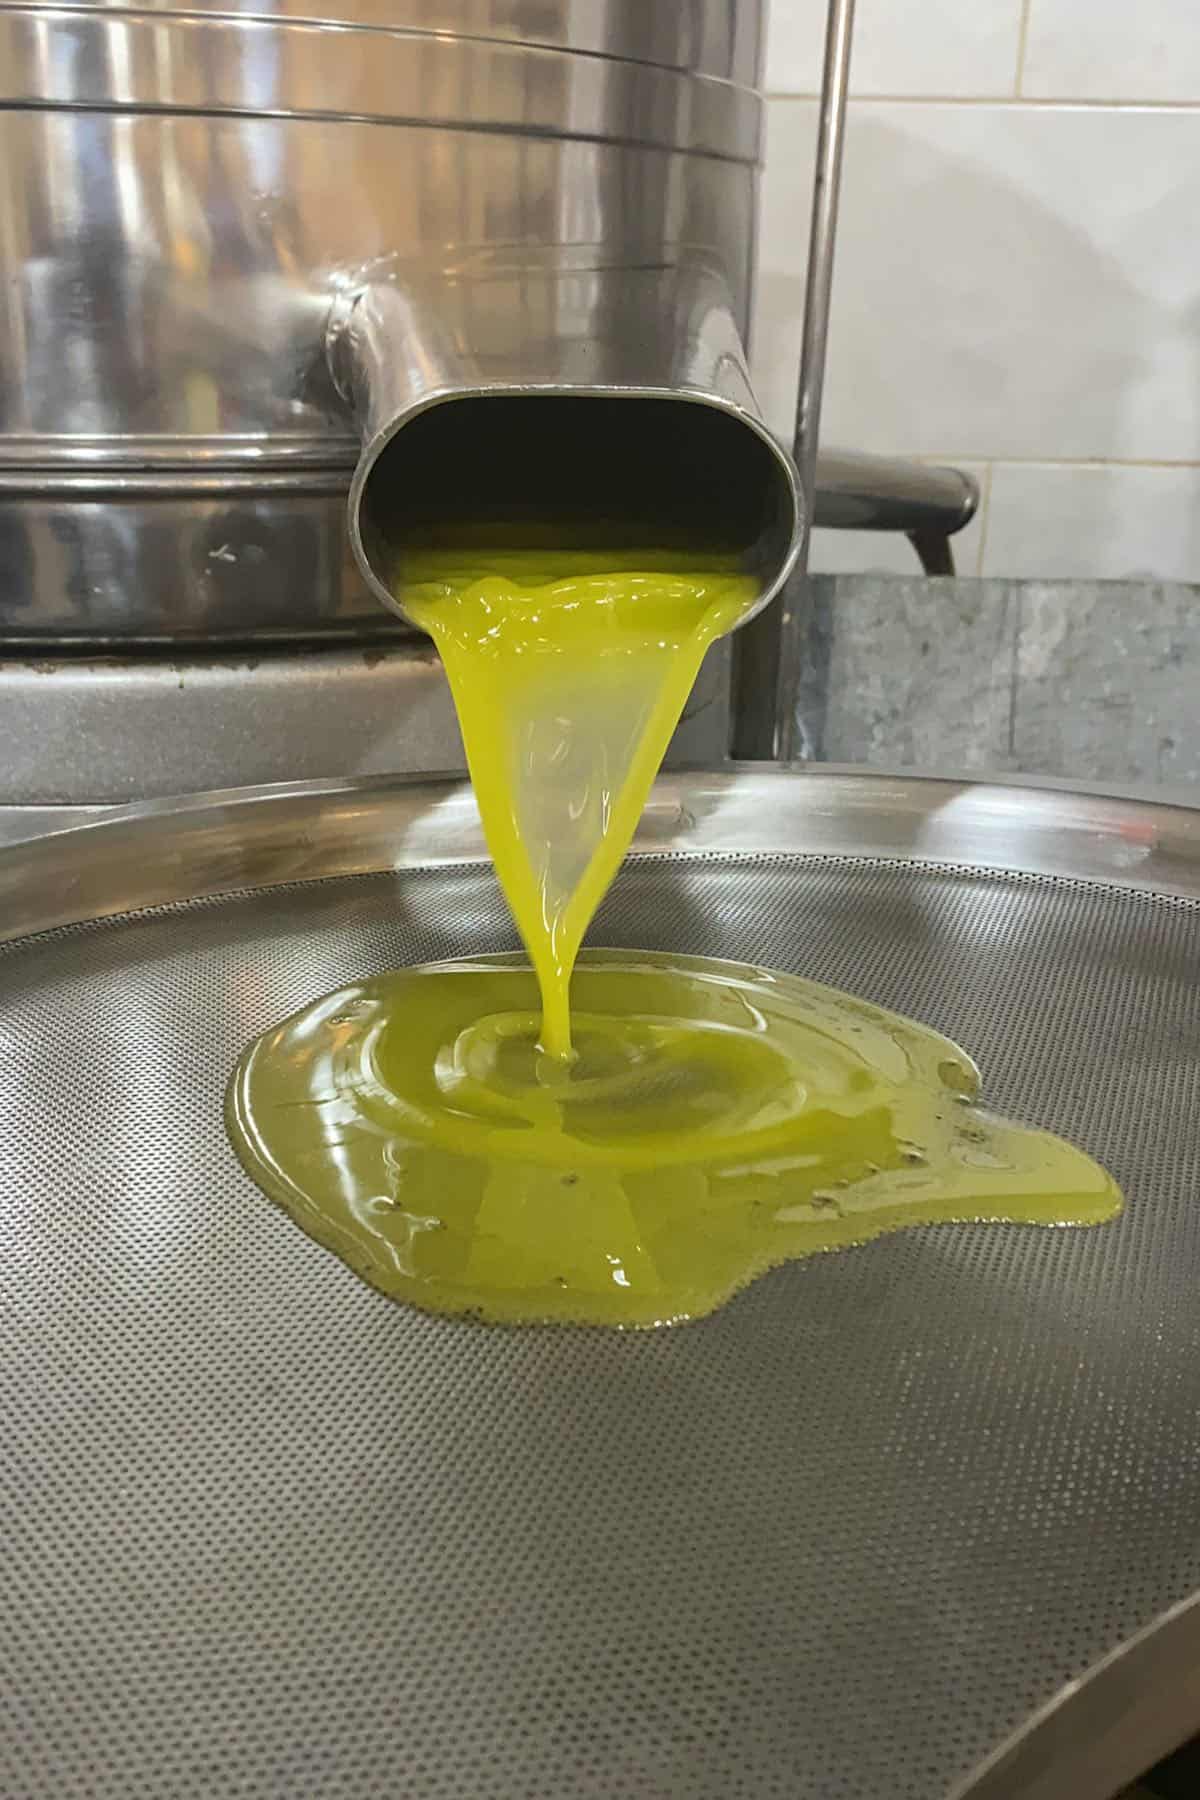 Sieving freshly made olive oil